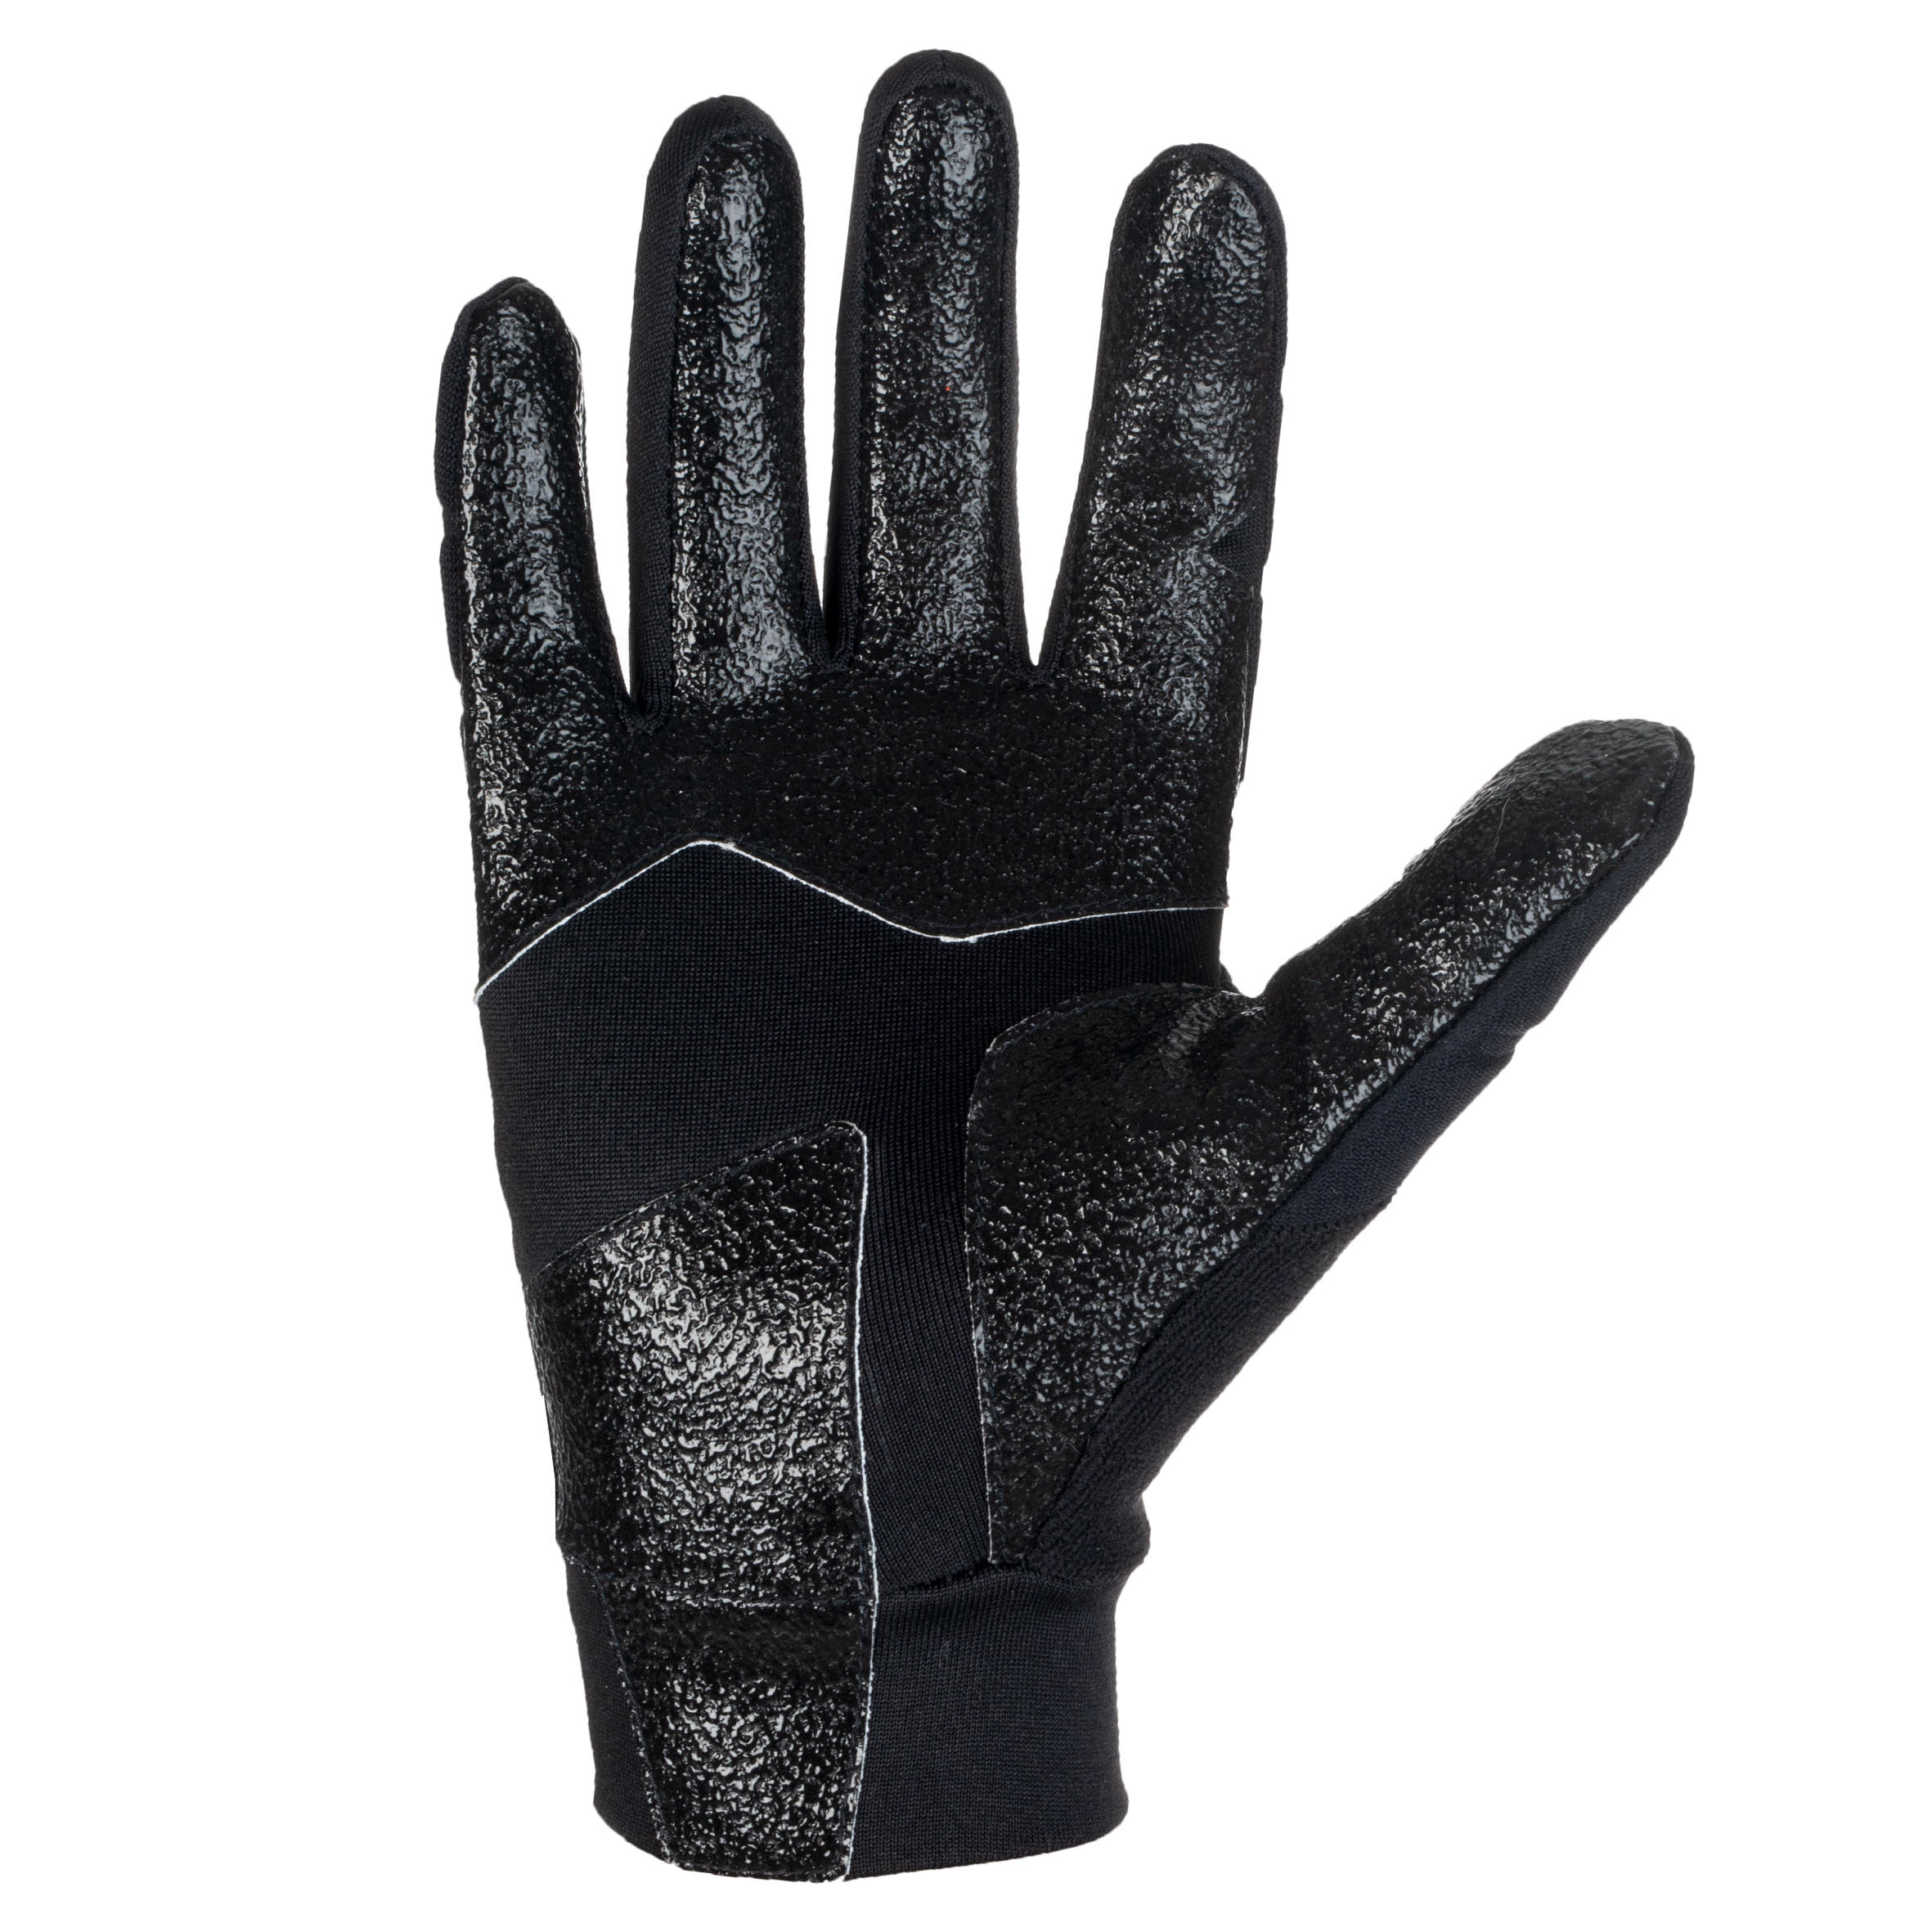 R500 Adult Winter Rugby Gloves - Black 4/8